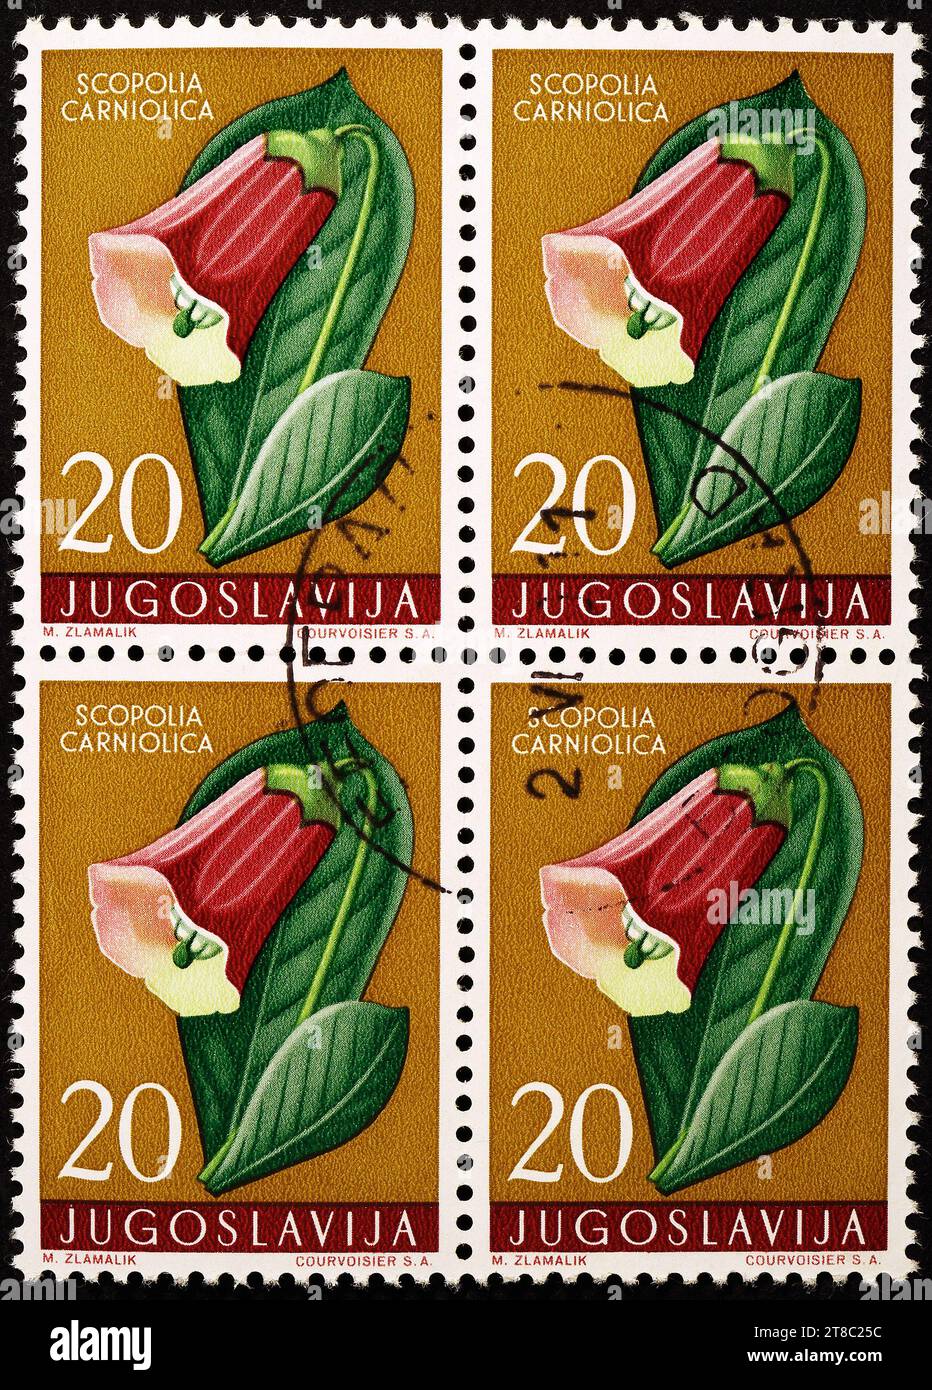 Scopolia carniolica 'Scopolia' - YUGOSLAVIA, POSTAGE STAMP Stock Photo